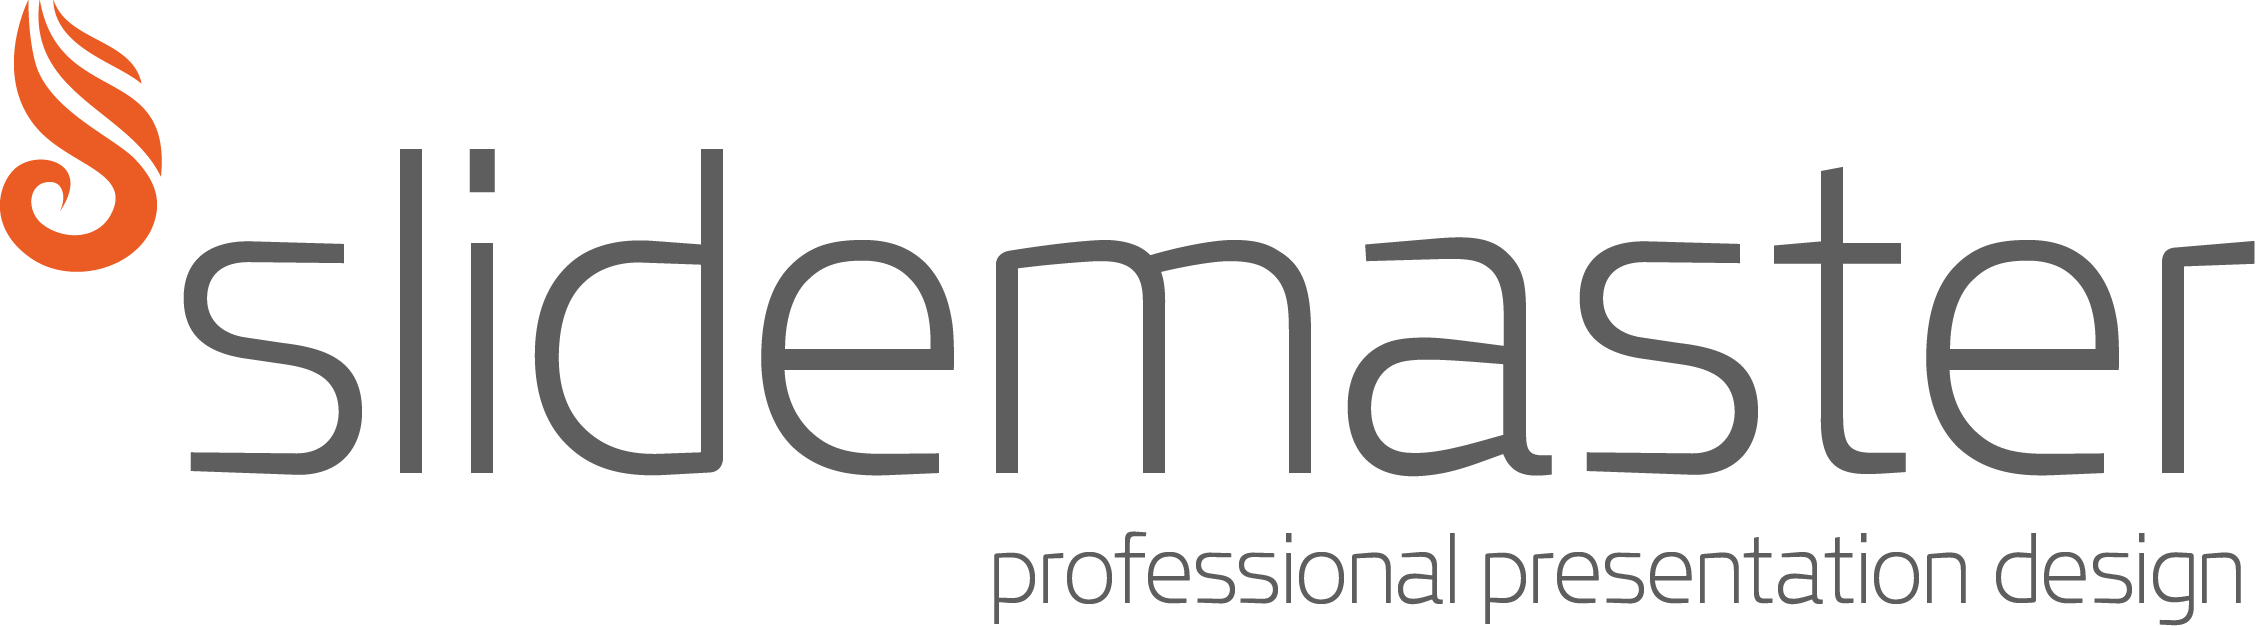 slidemaster Logo